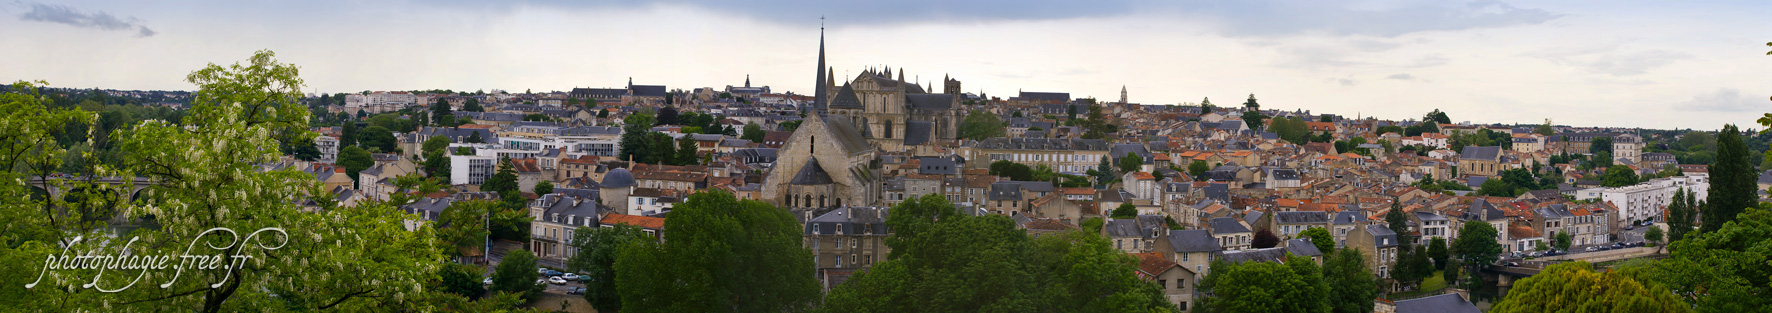 Poitiers panorama